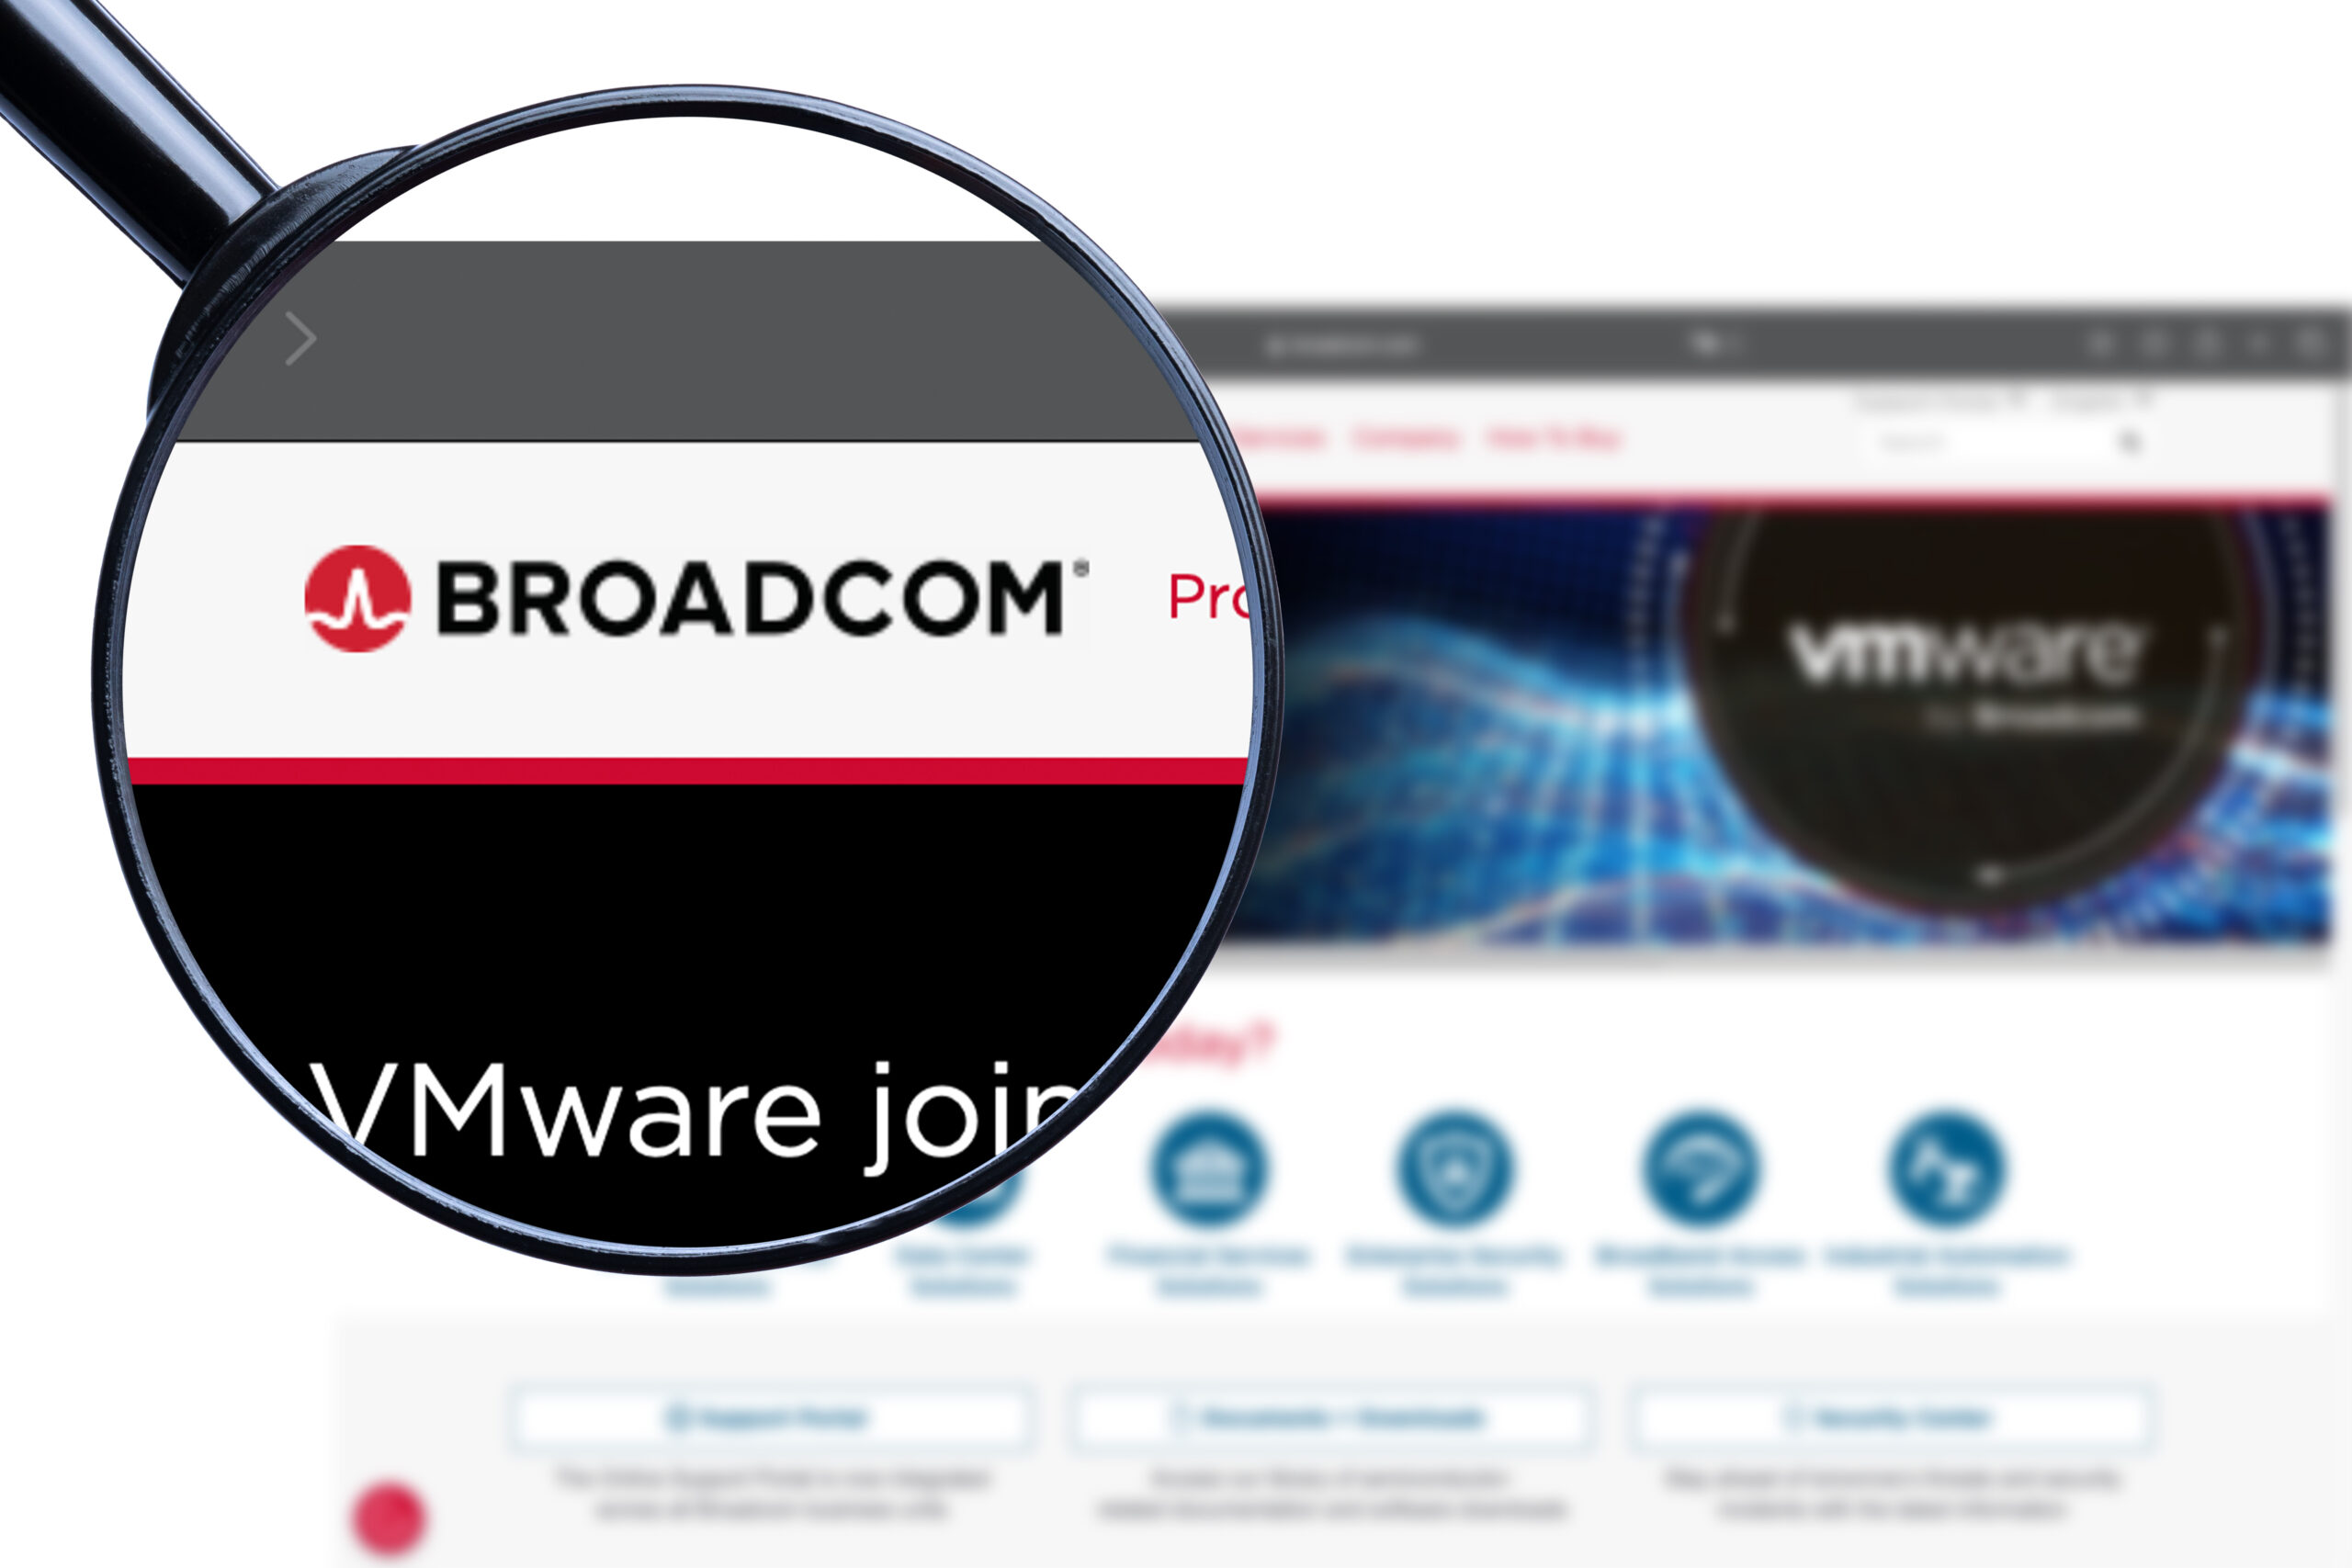 New VMware Licensing Changes under Broadcom create Choppy Waters